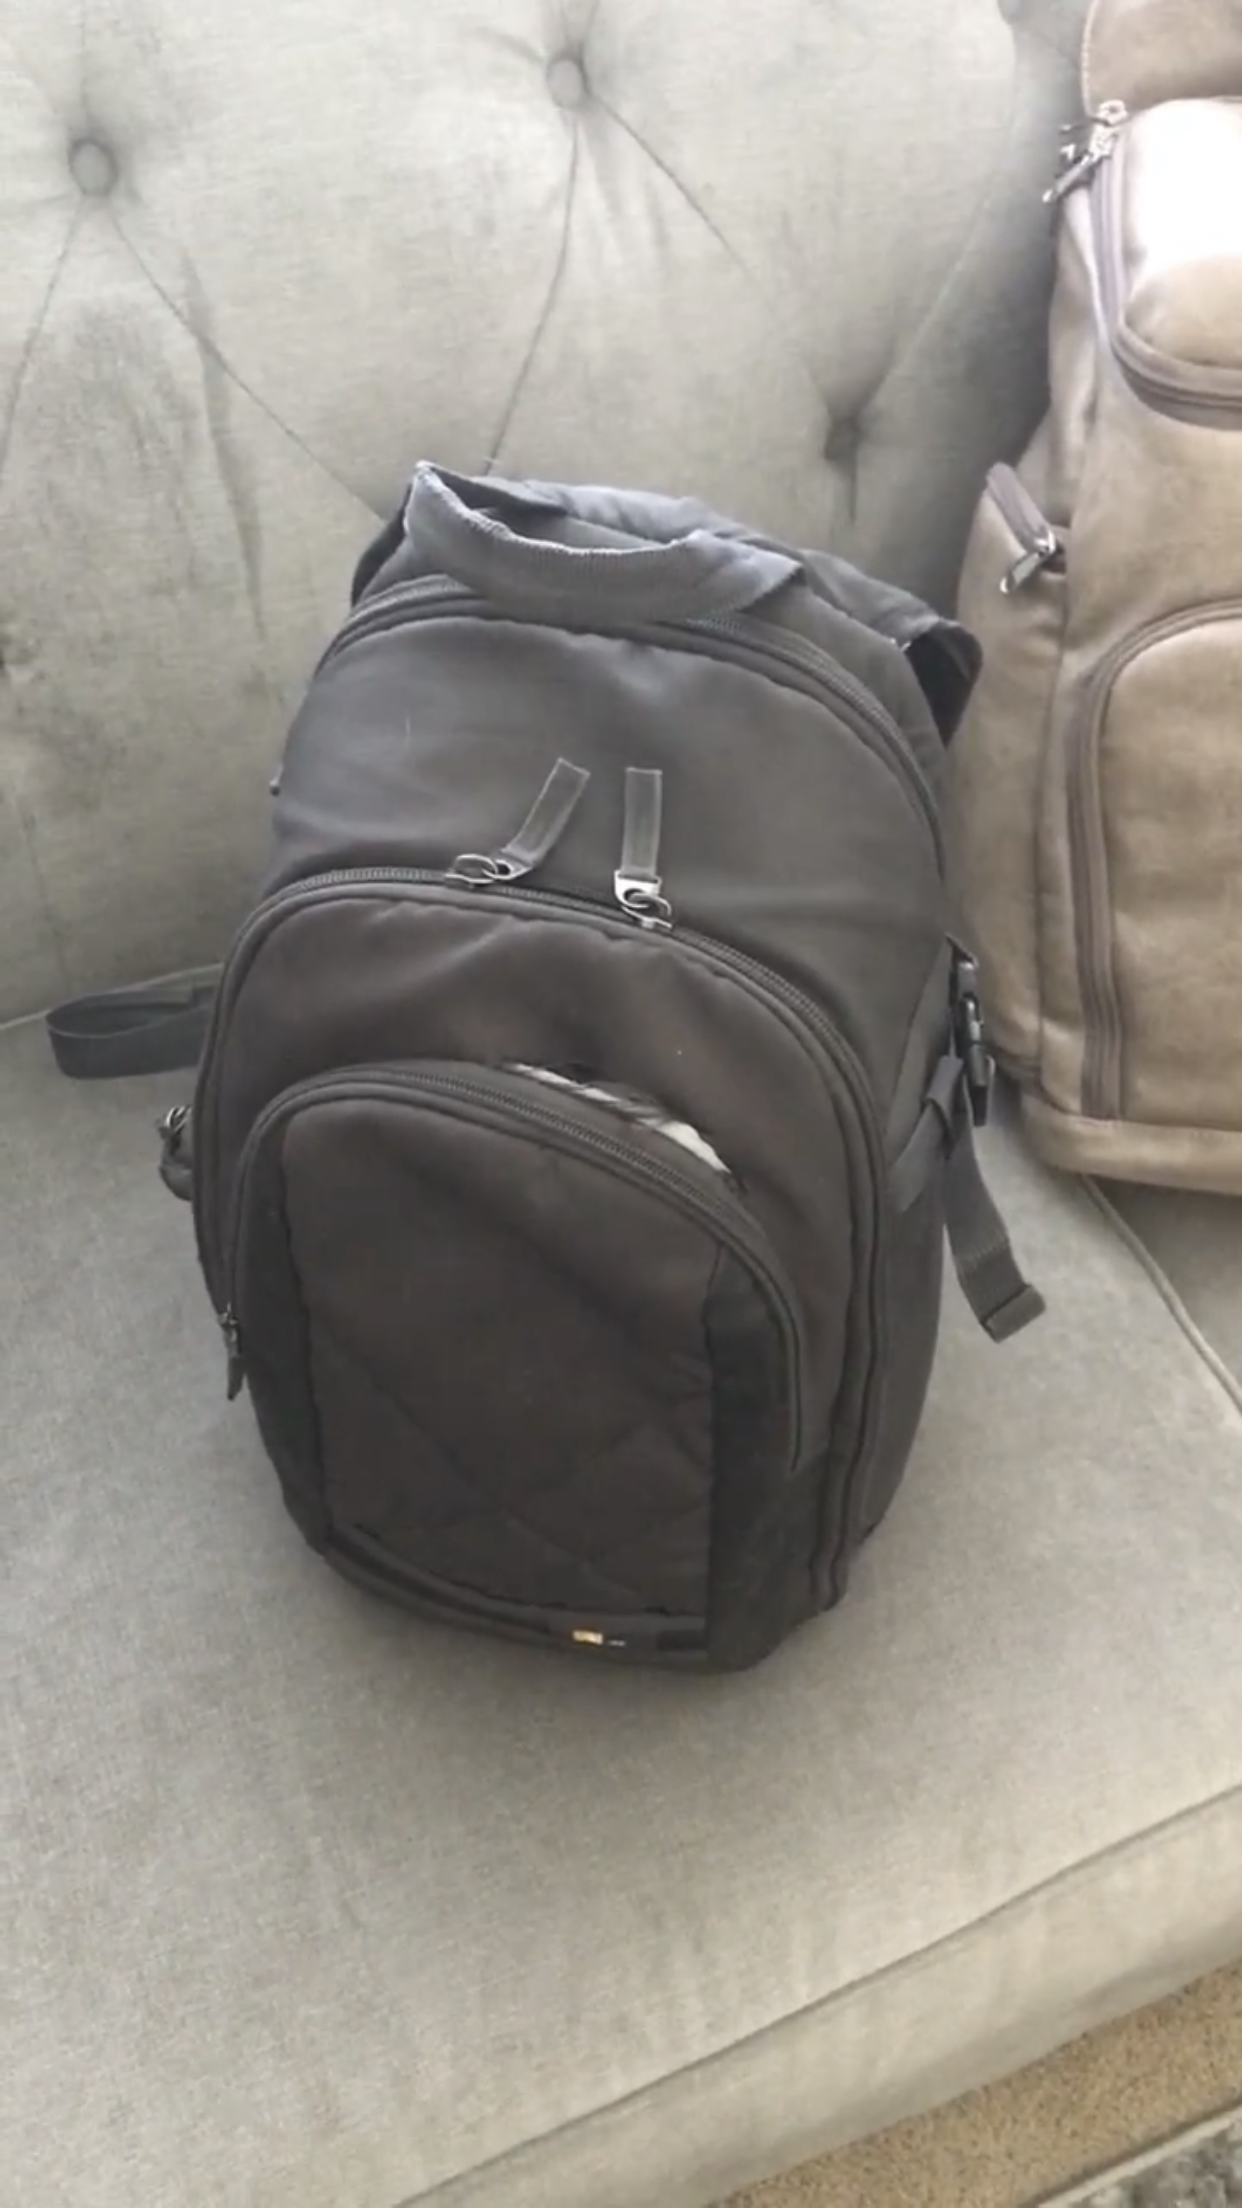 Amazon camera backpack